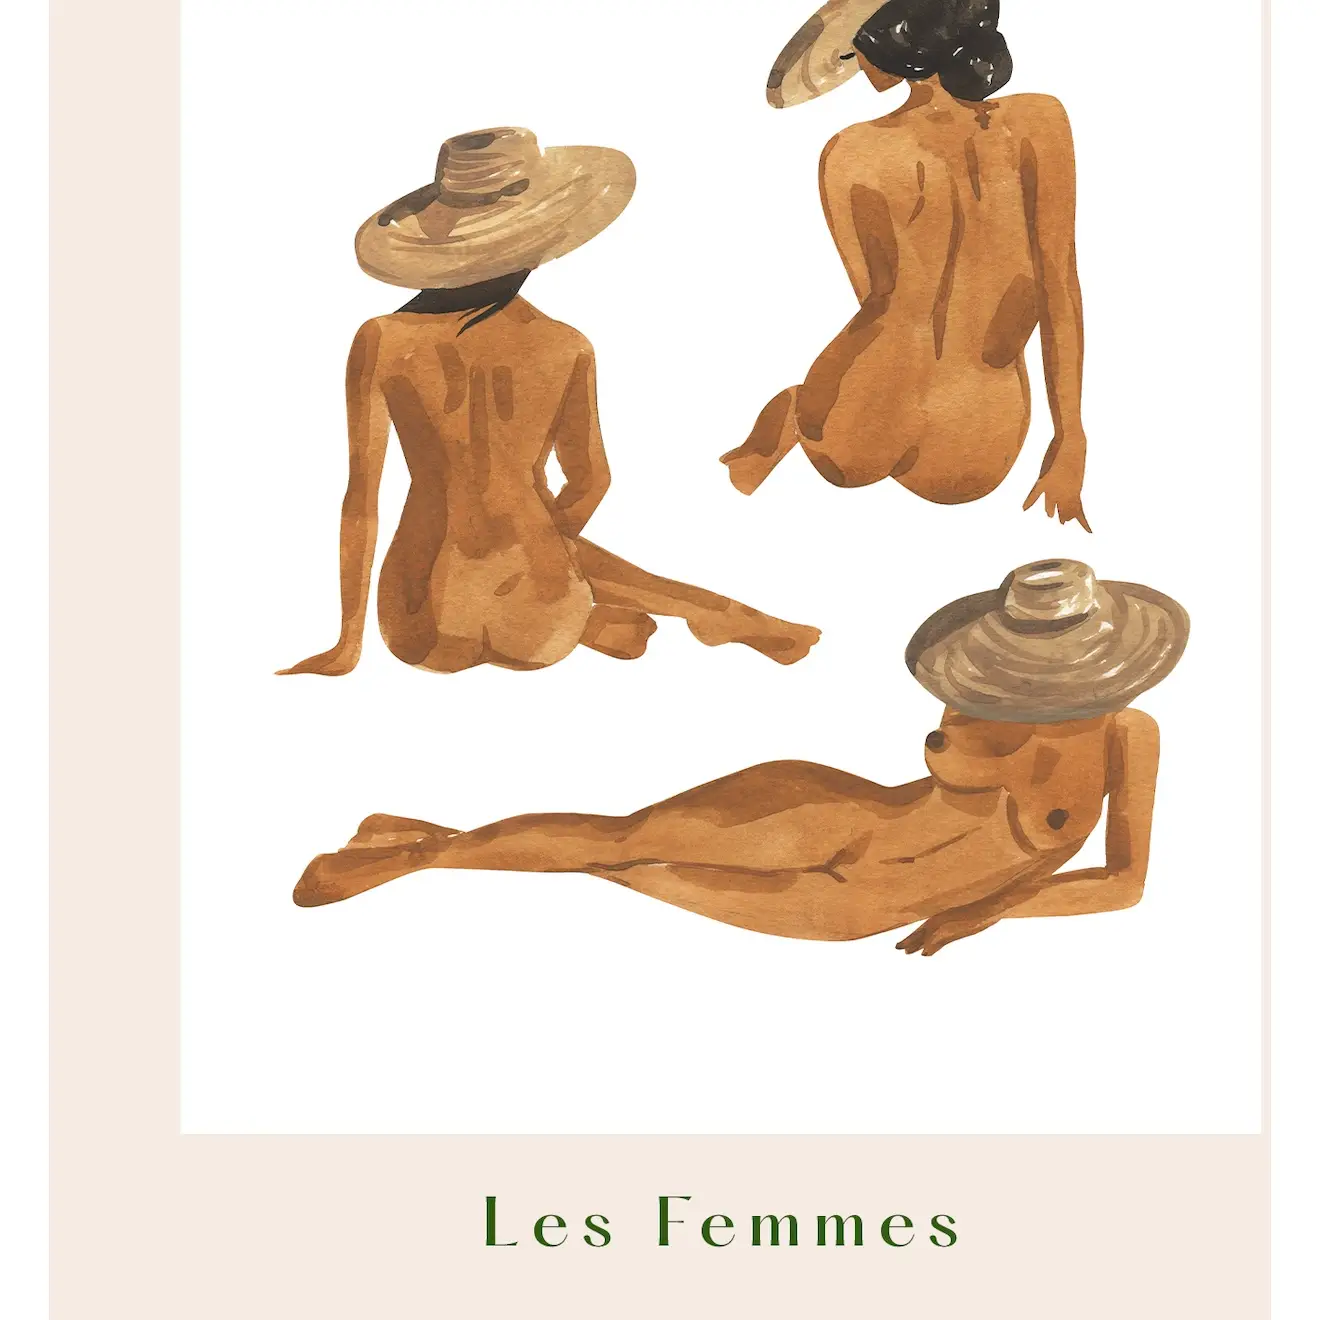 Les Femmes Art Print 8x10"